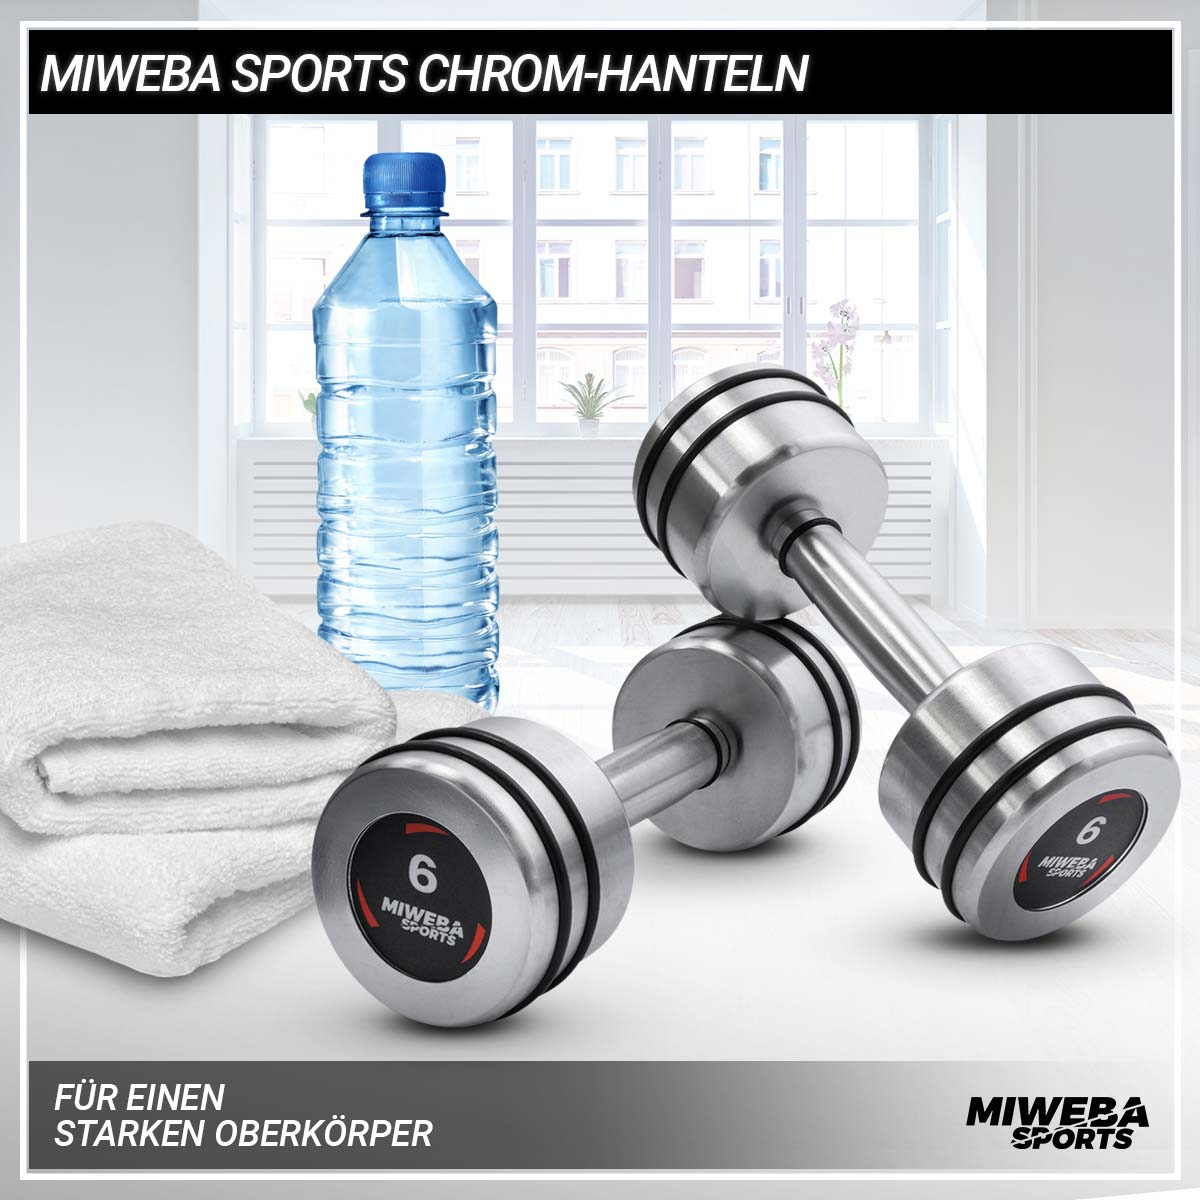 MIWEBA SPORTS Fitnesszubehör Matt Chrom silber 2x Kurzhanteln, kg Hanteln 6.0